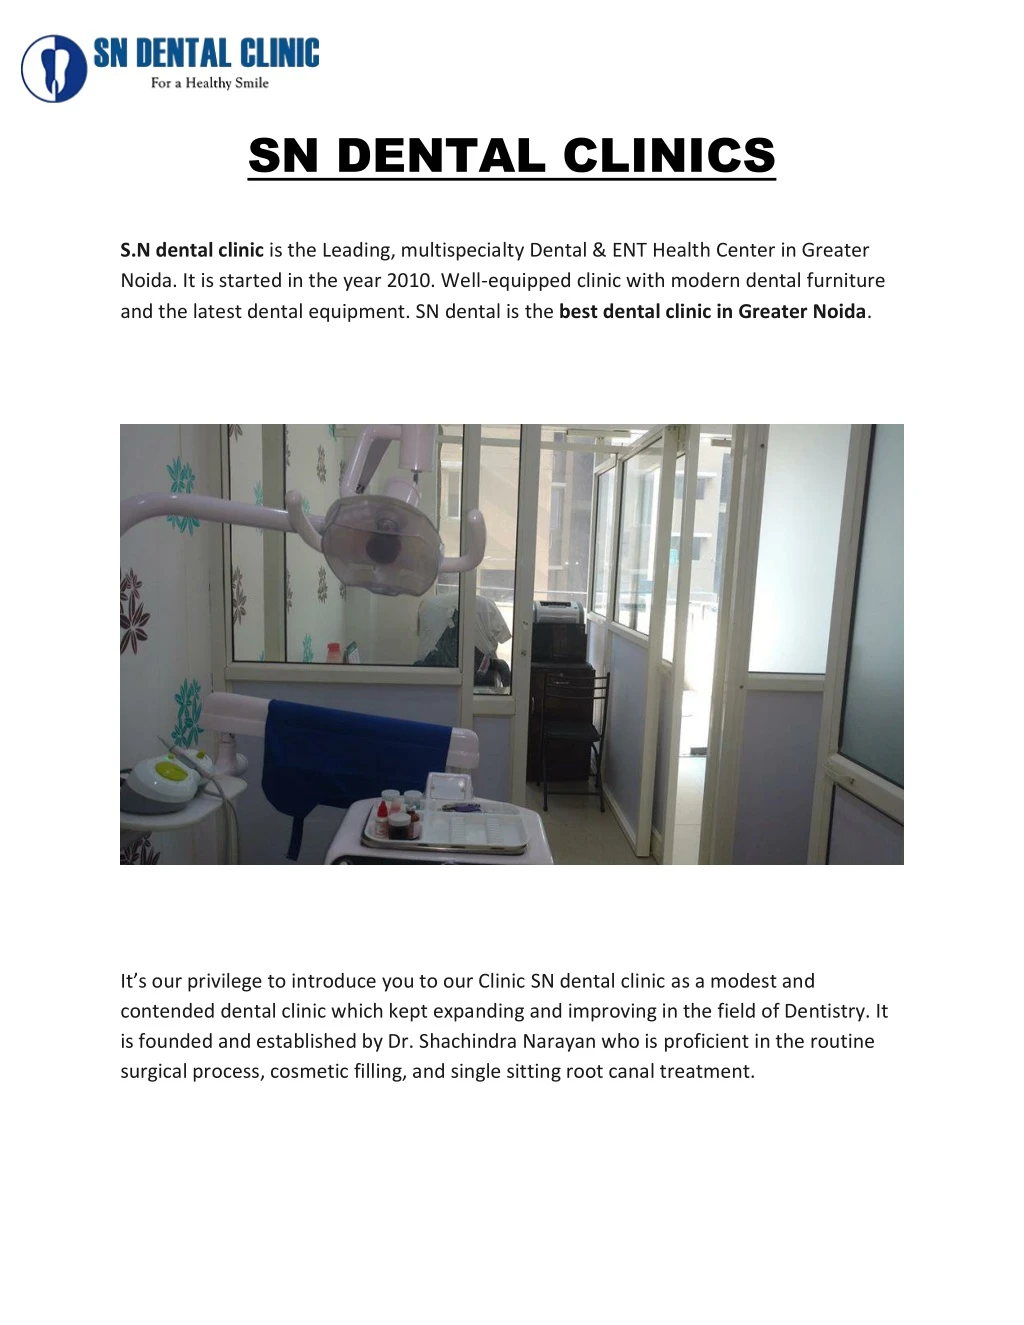 sn dental clinics